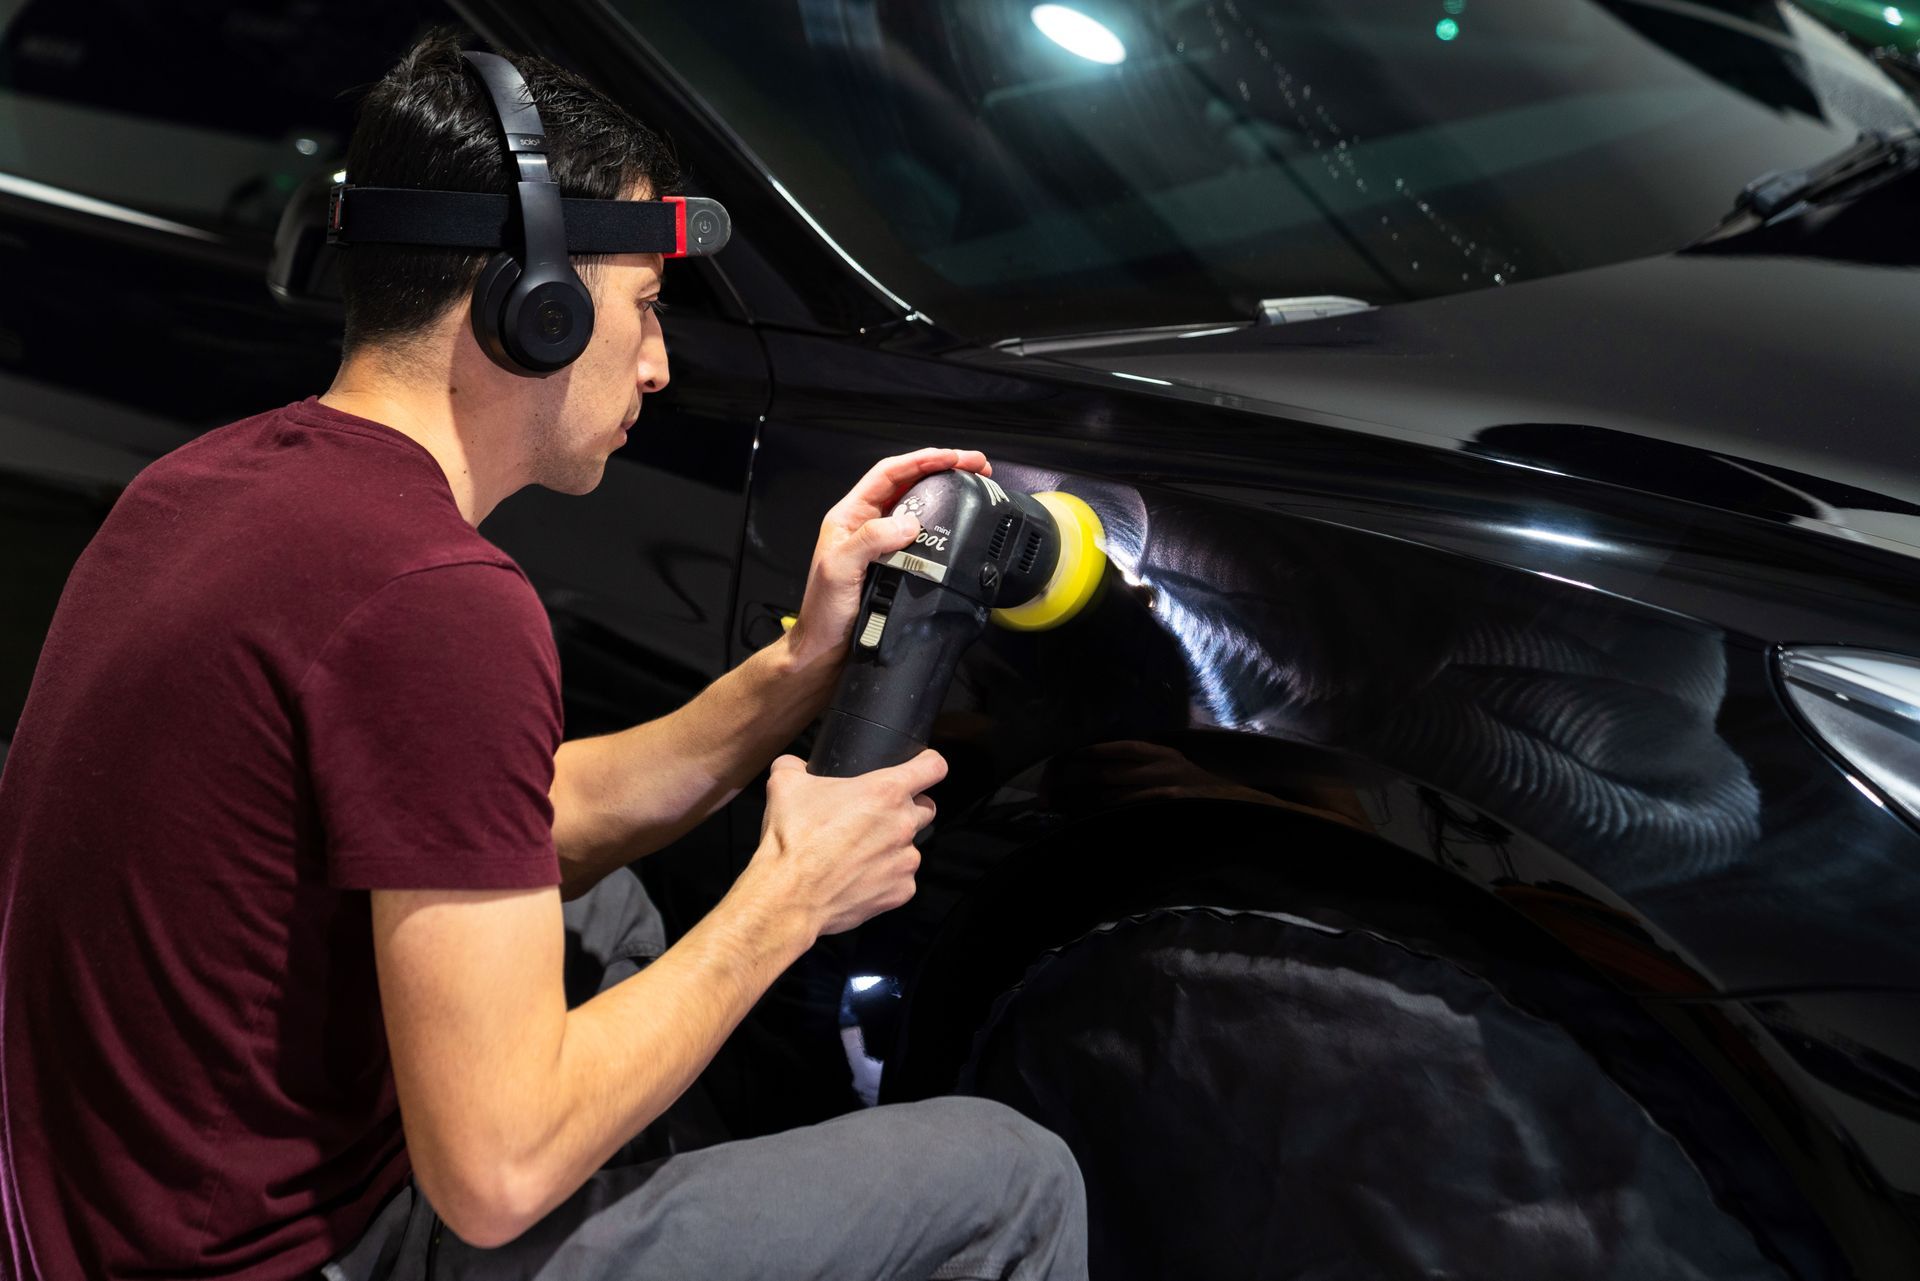 A man wearing headphones is paint polishing a black Tesla car .